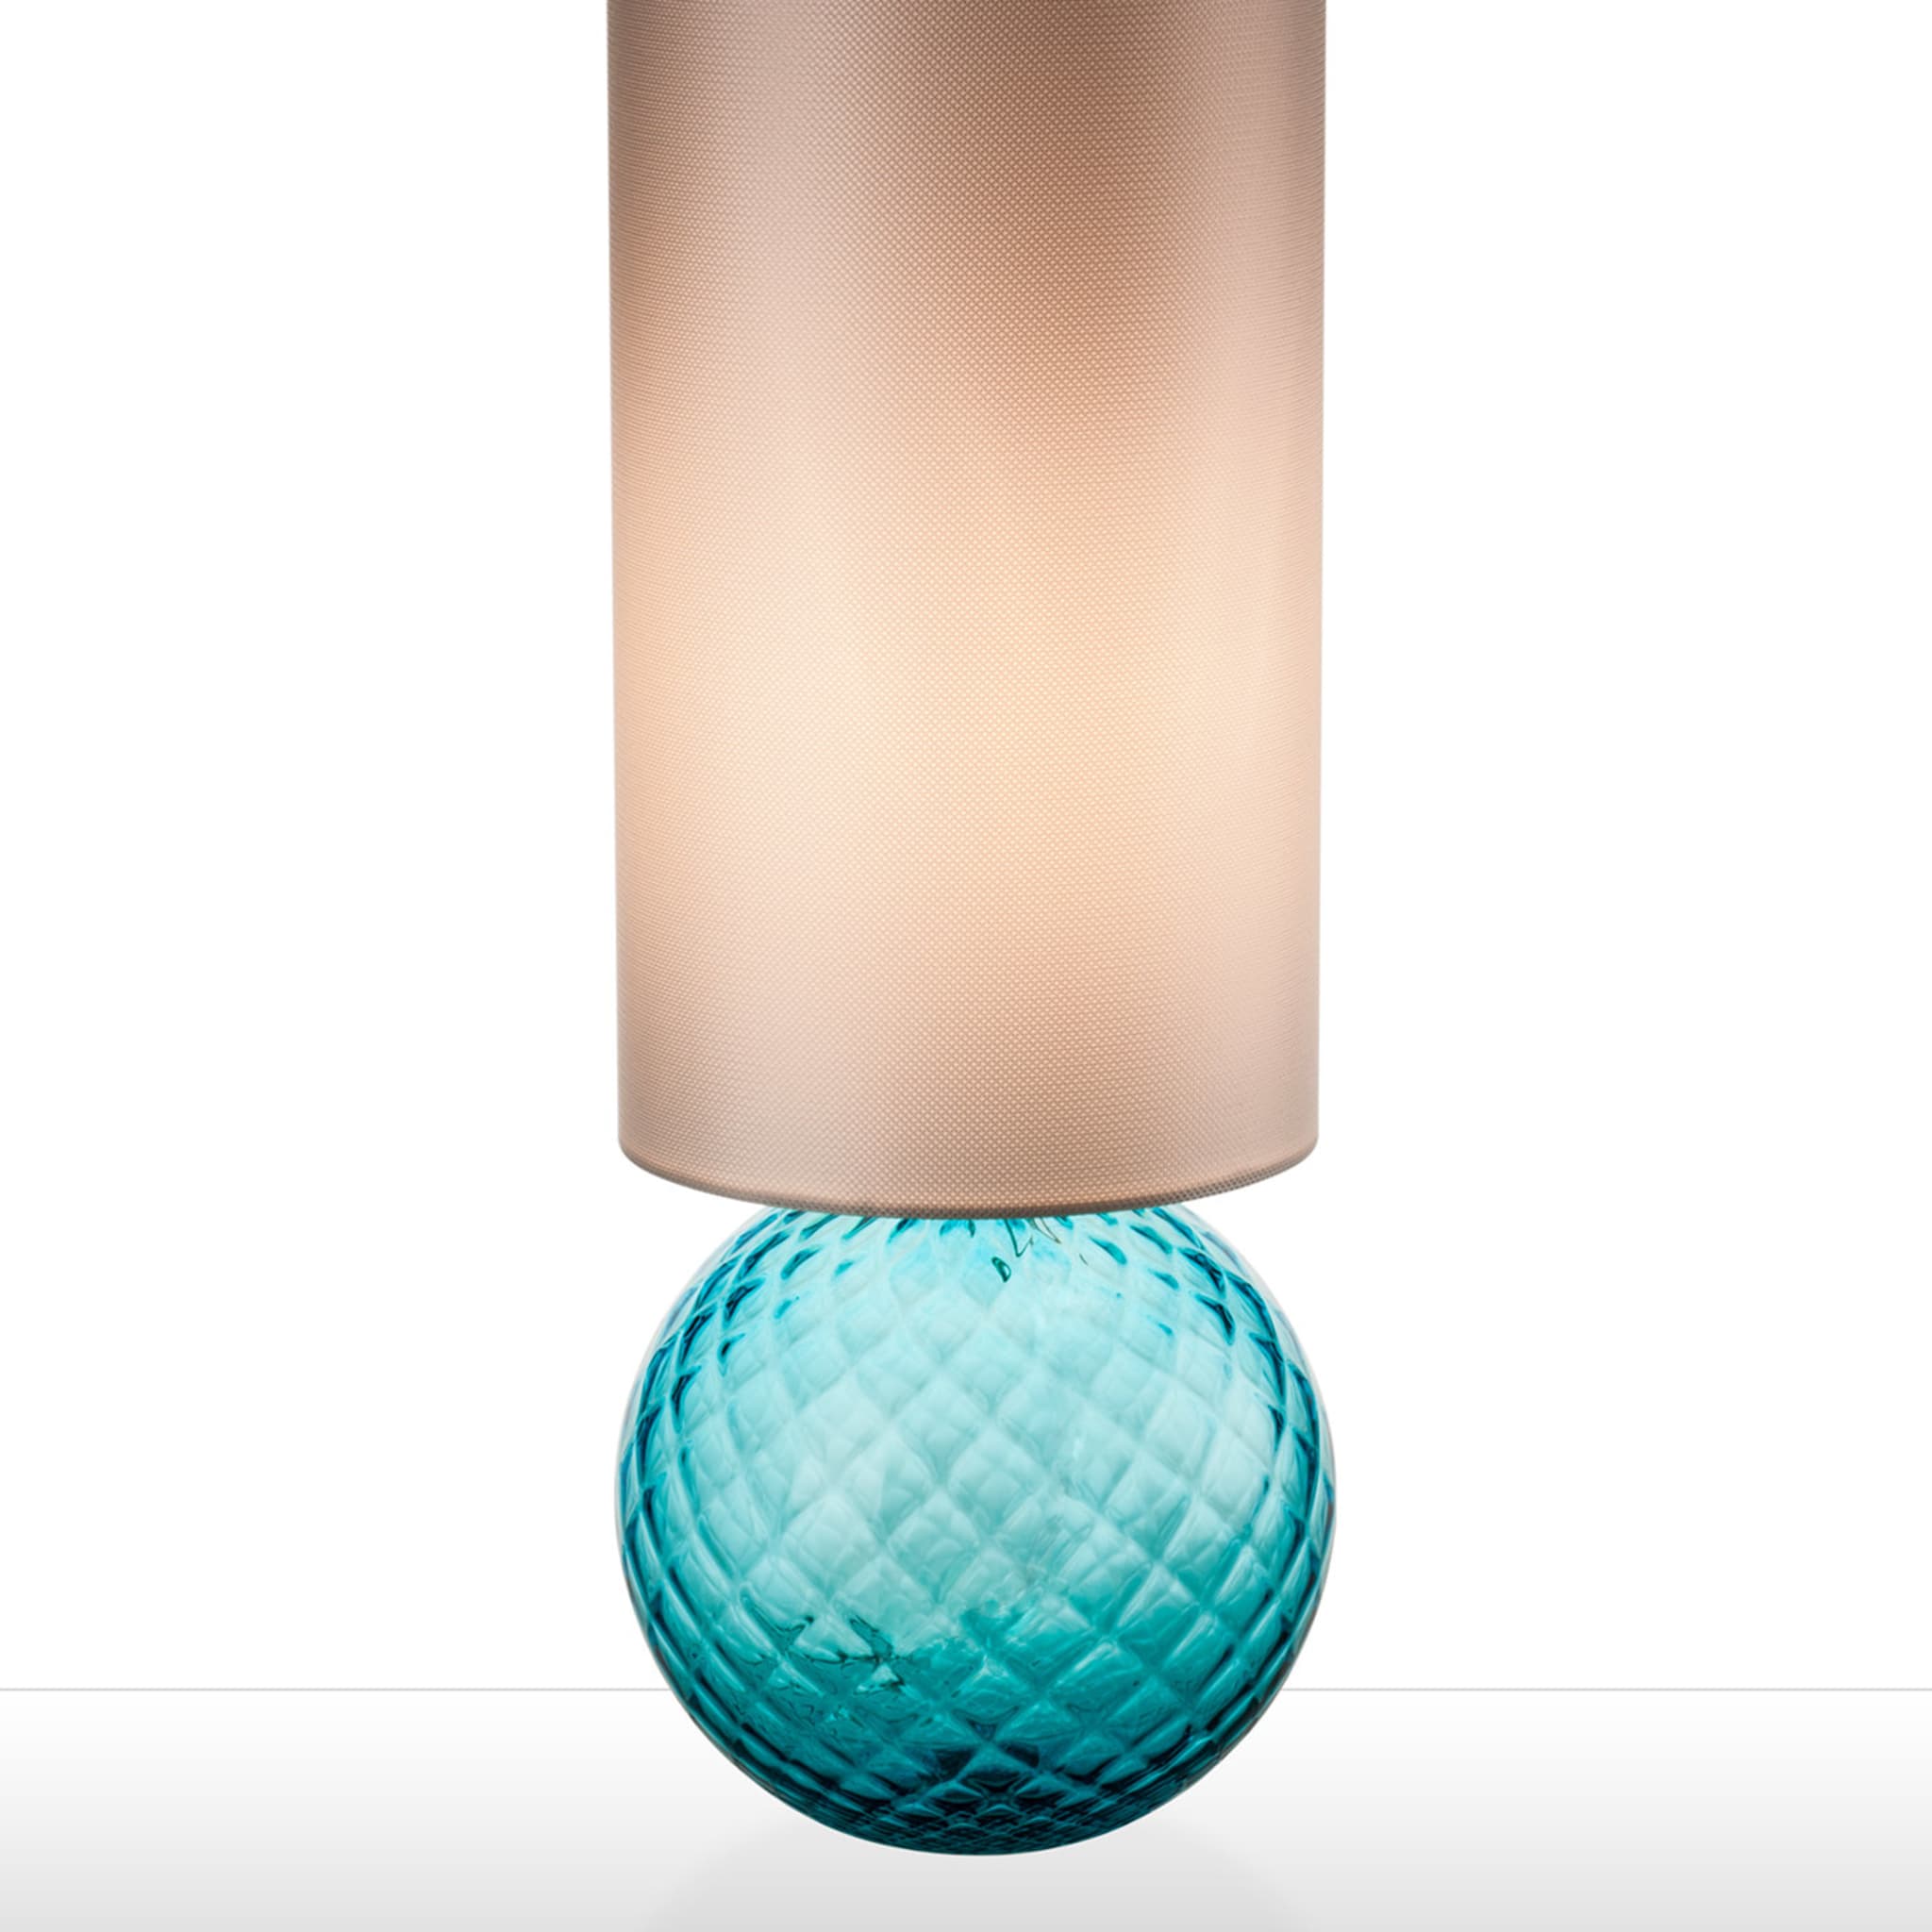 Balloton Aqua Table Lamp with Shade - Alternative view 1